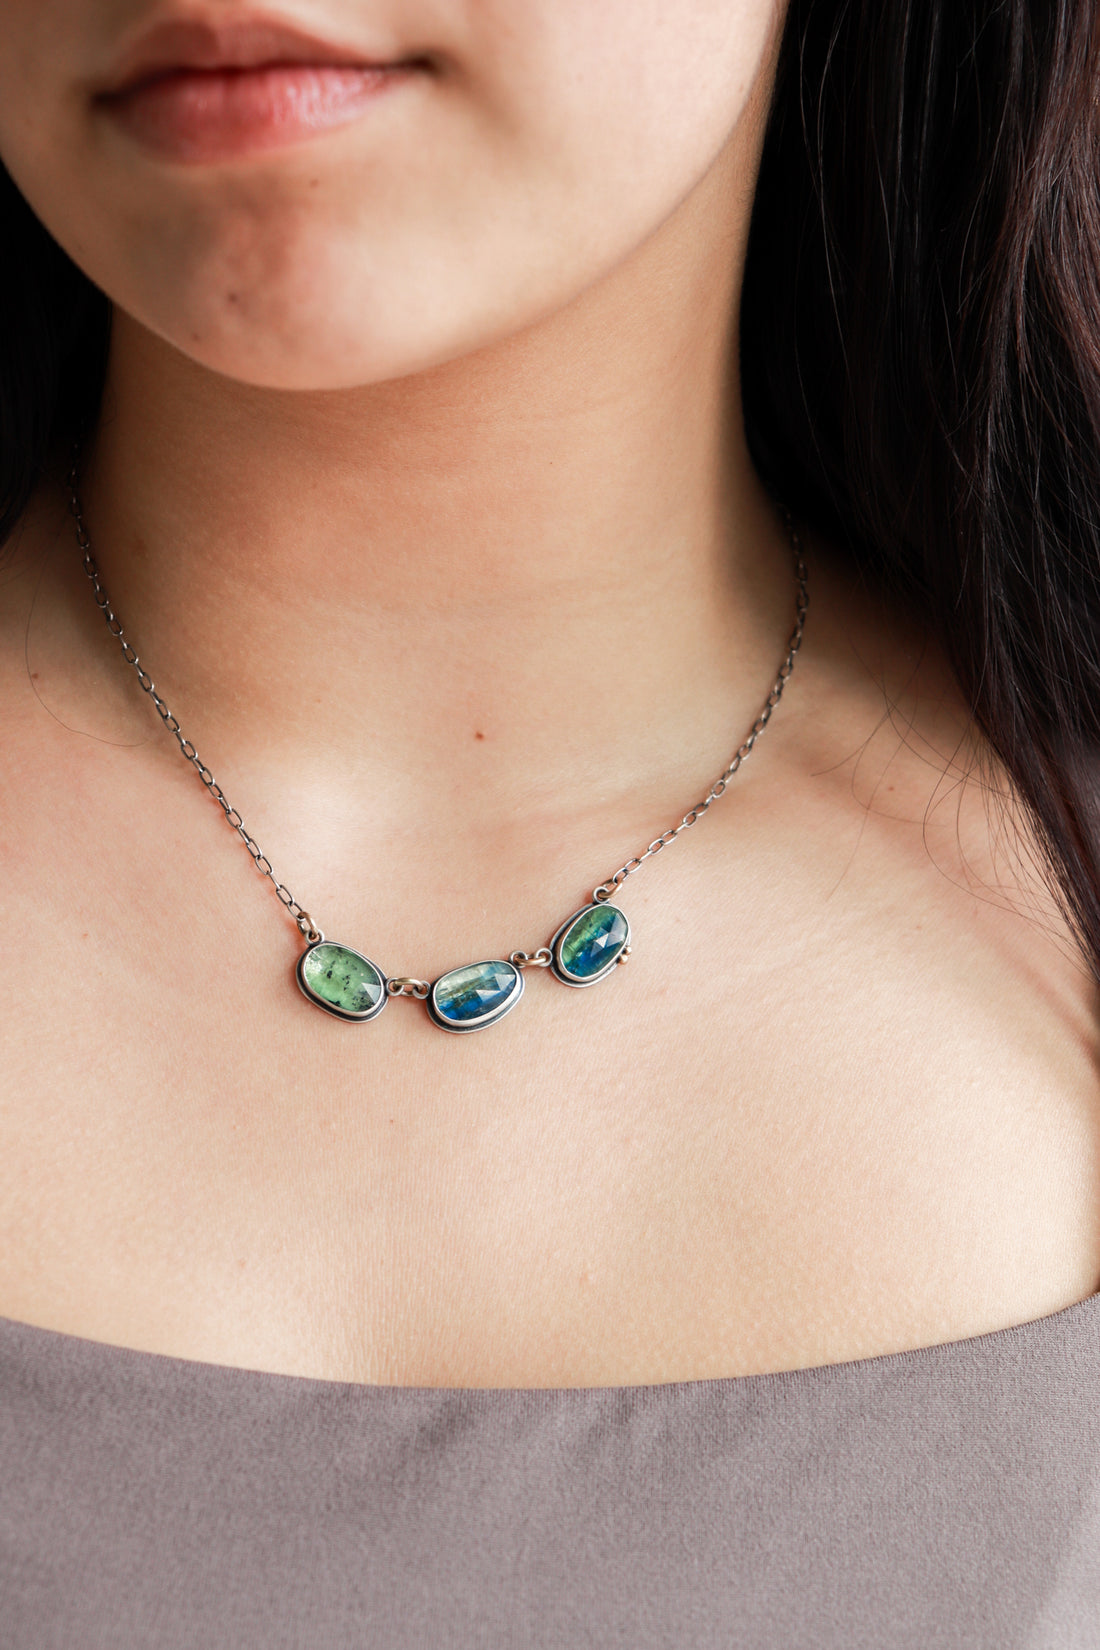 Green/Blue Kyanite Three Stone Necklace